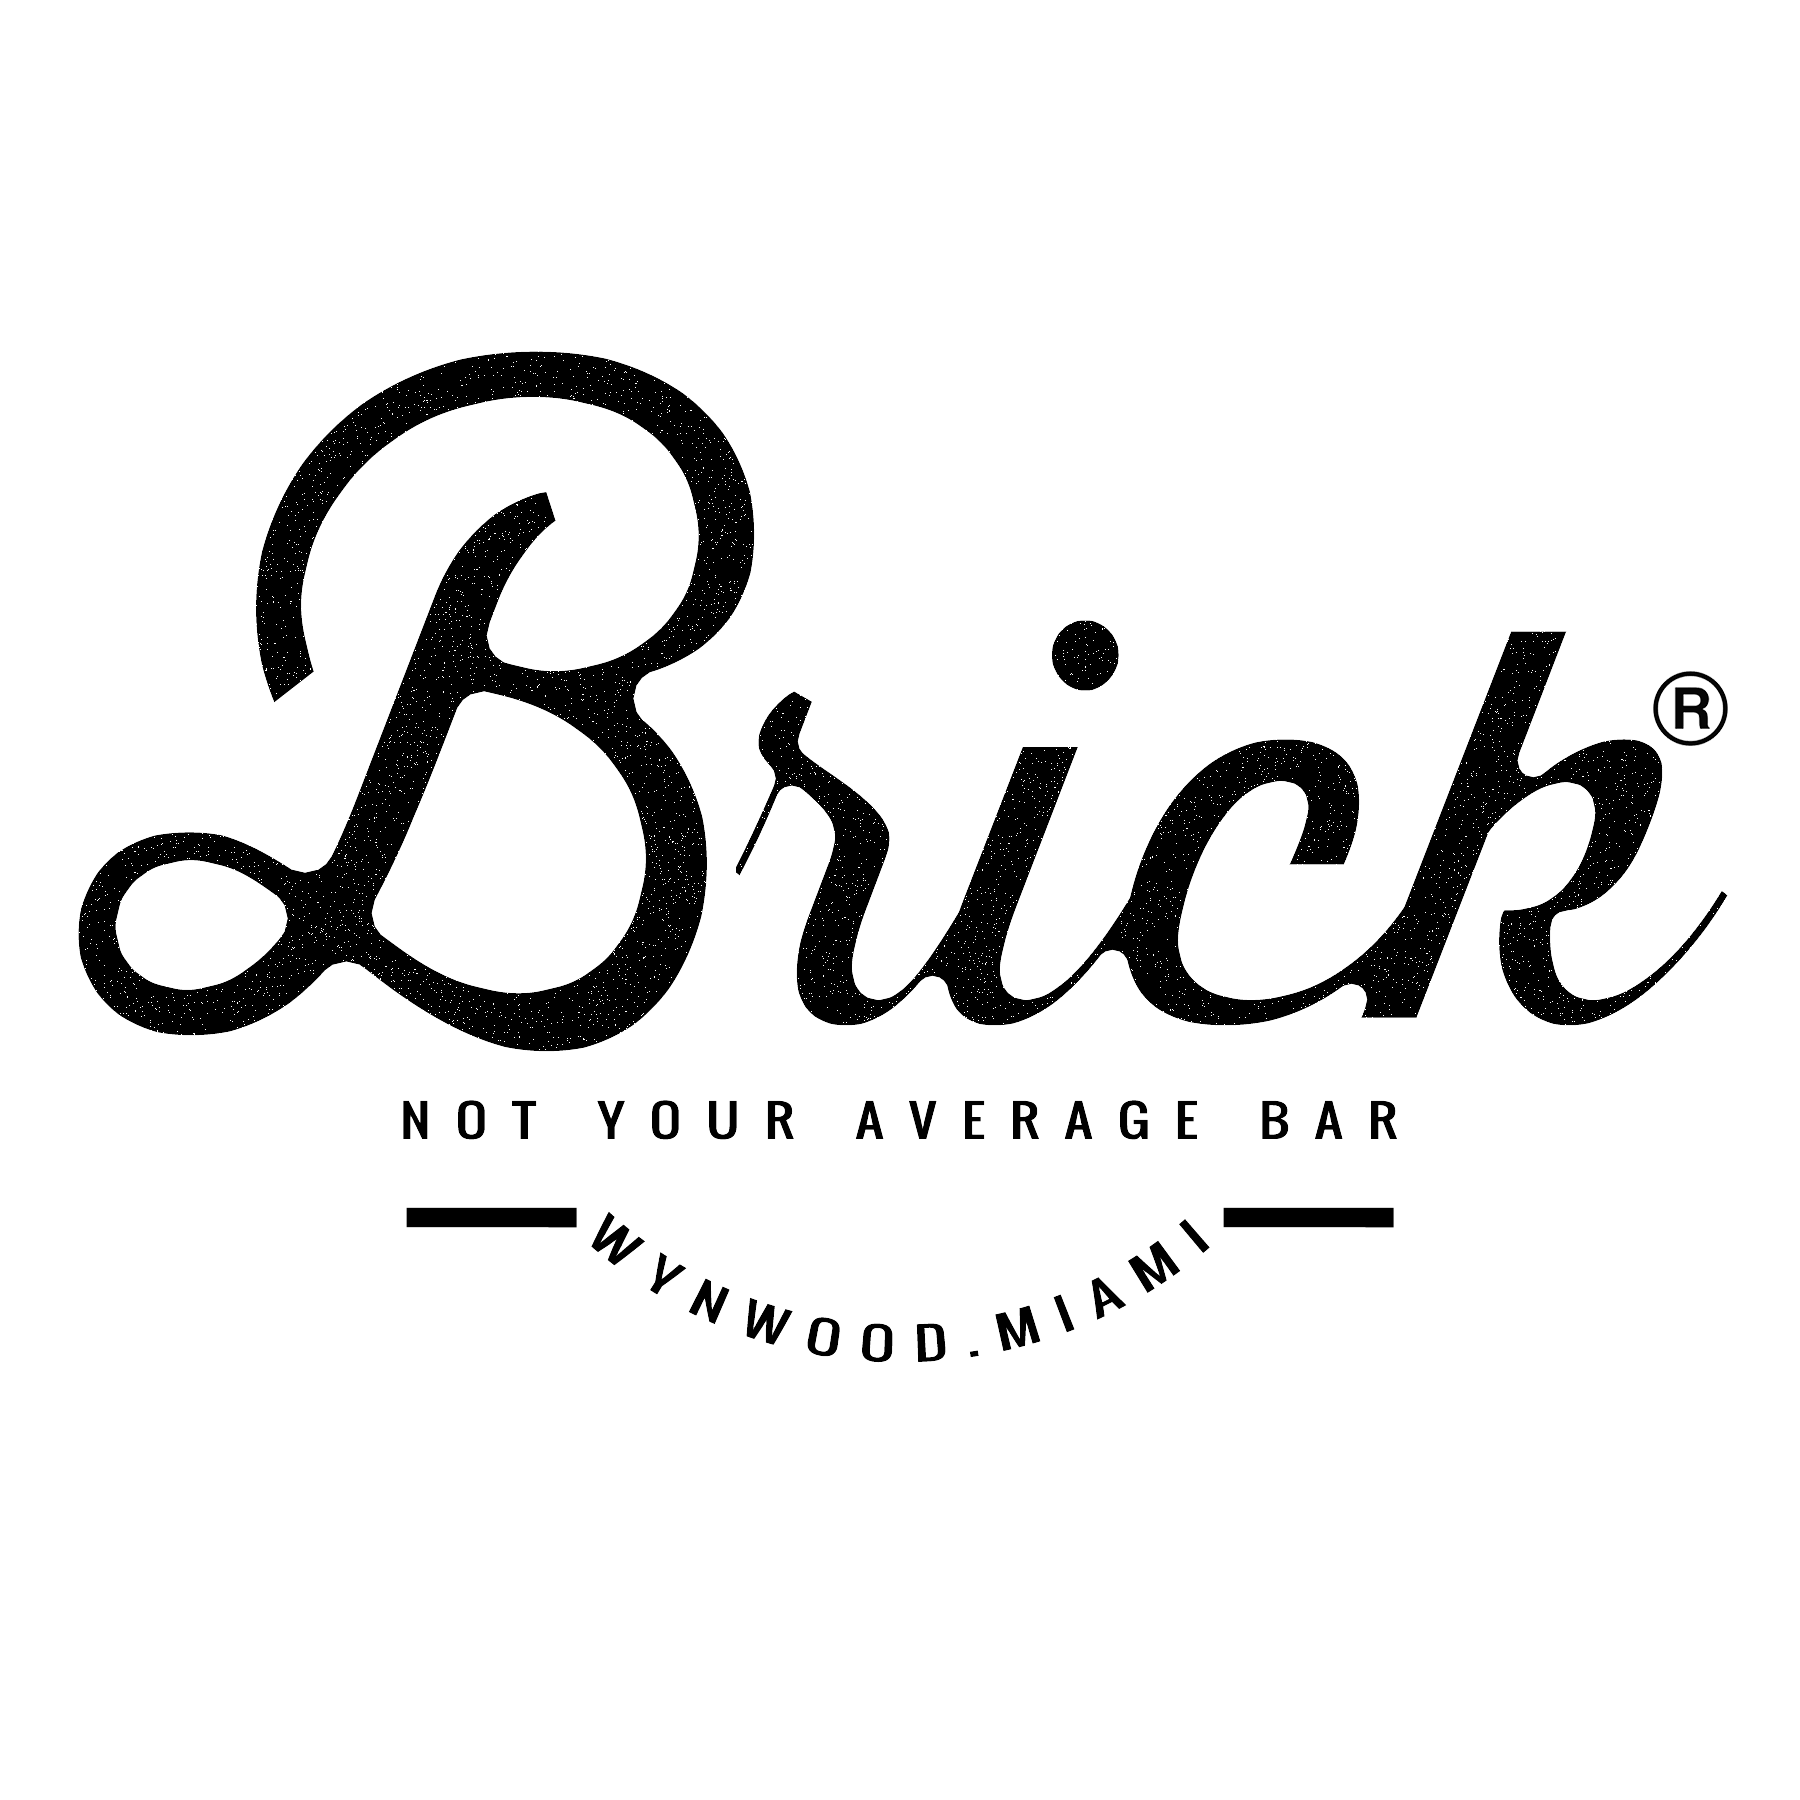 Miami.com Logo - Brick – Not Your Average Bar